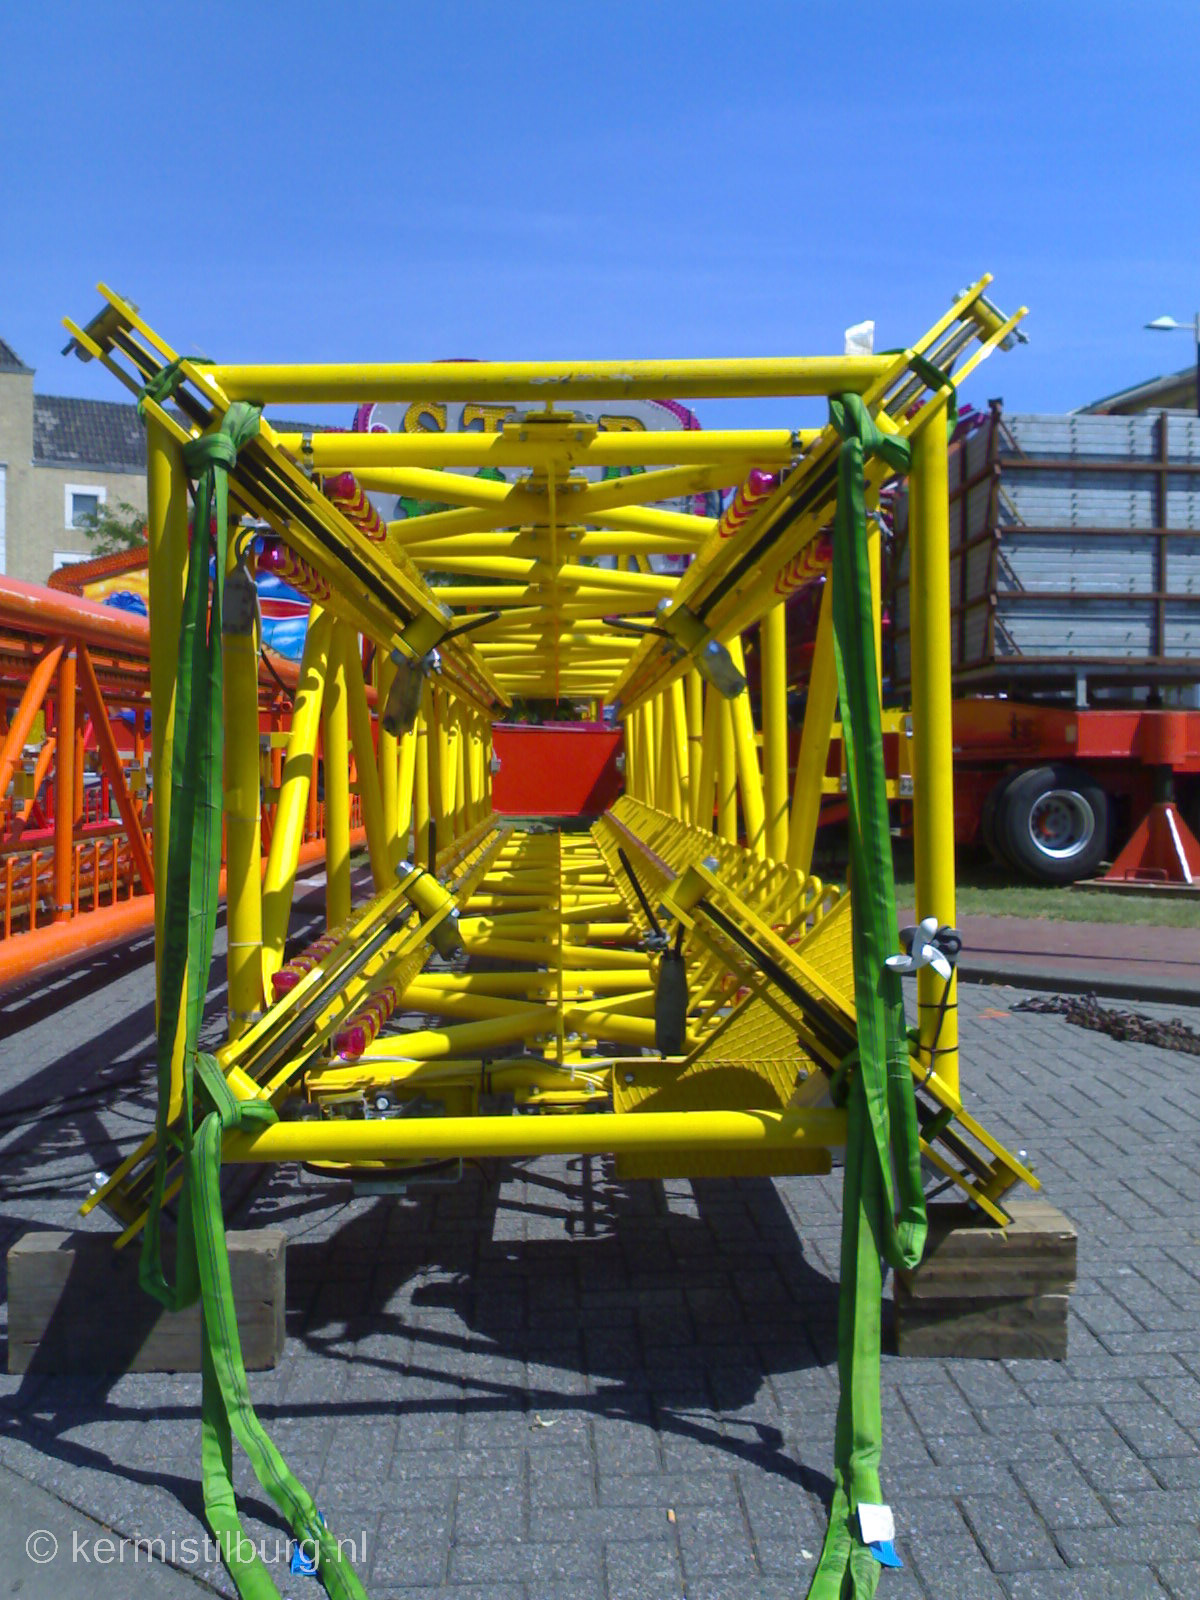 2006, Kermis, Tilburg, Tilburgse kermis, bouwen